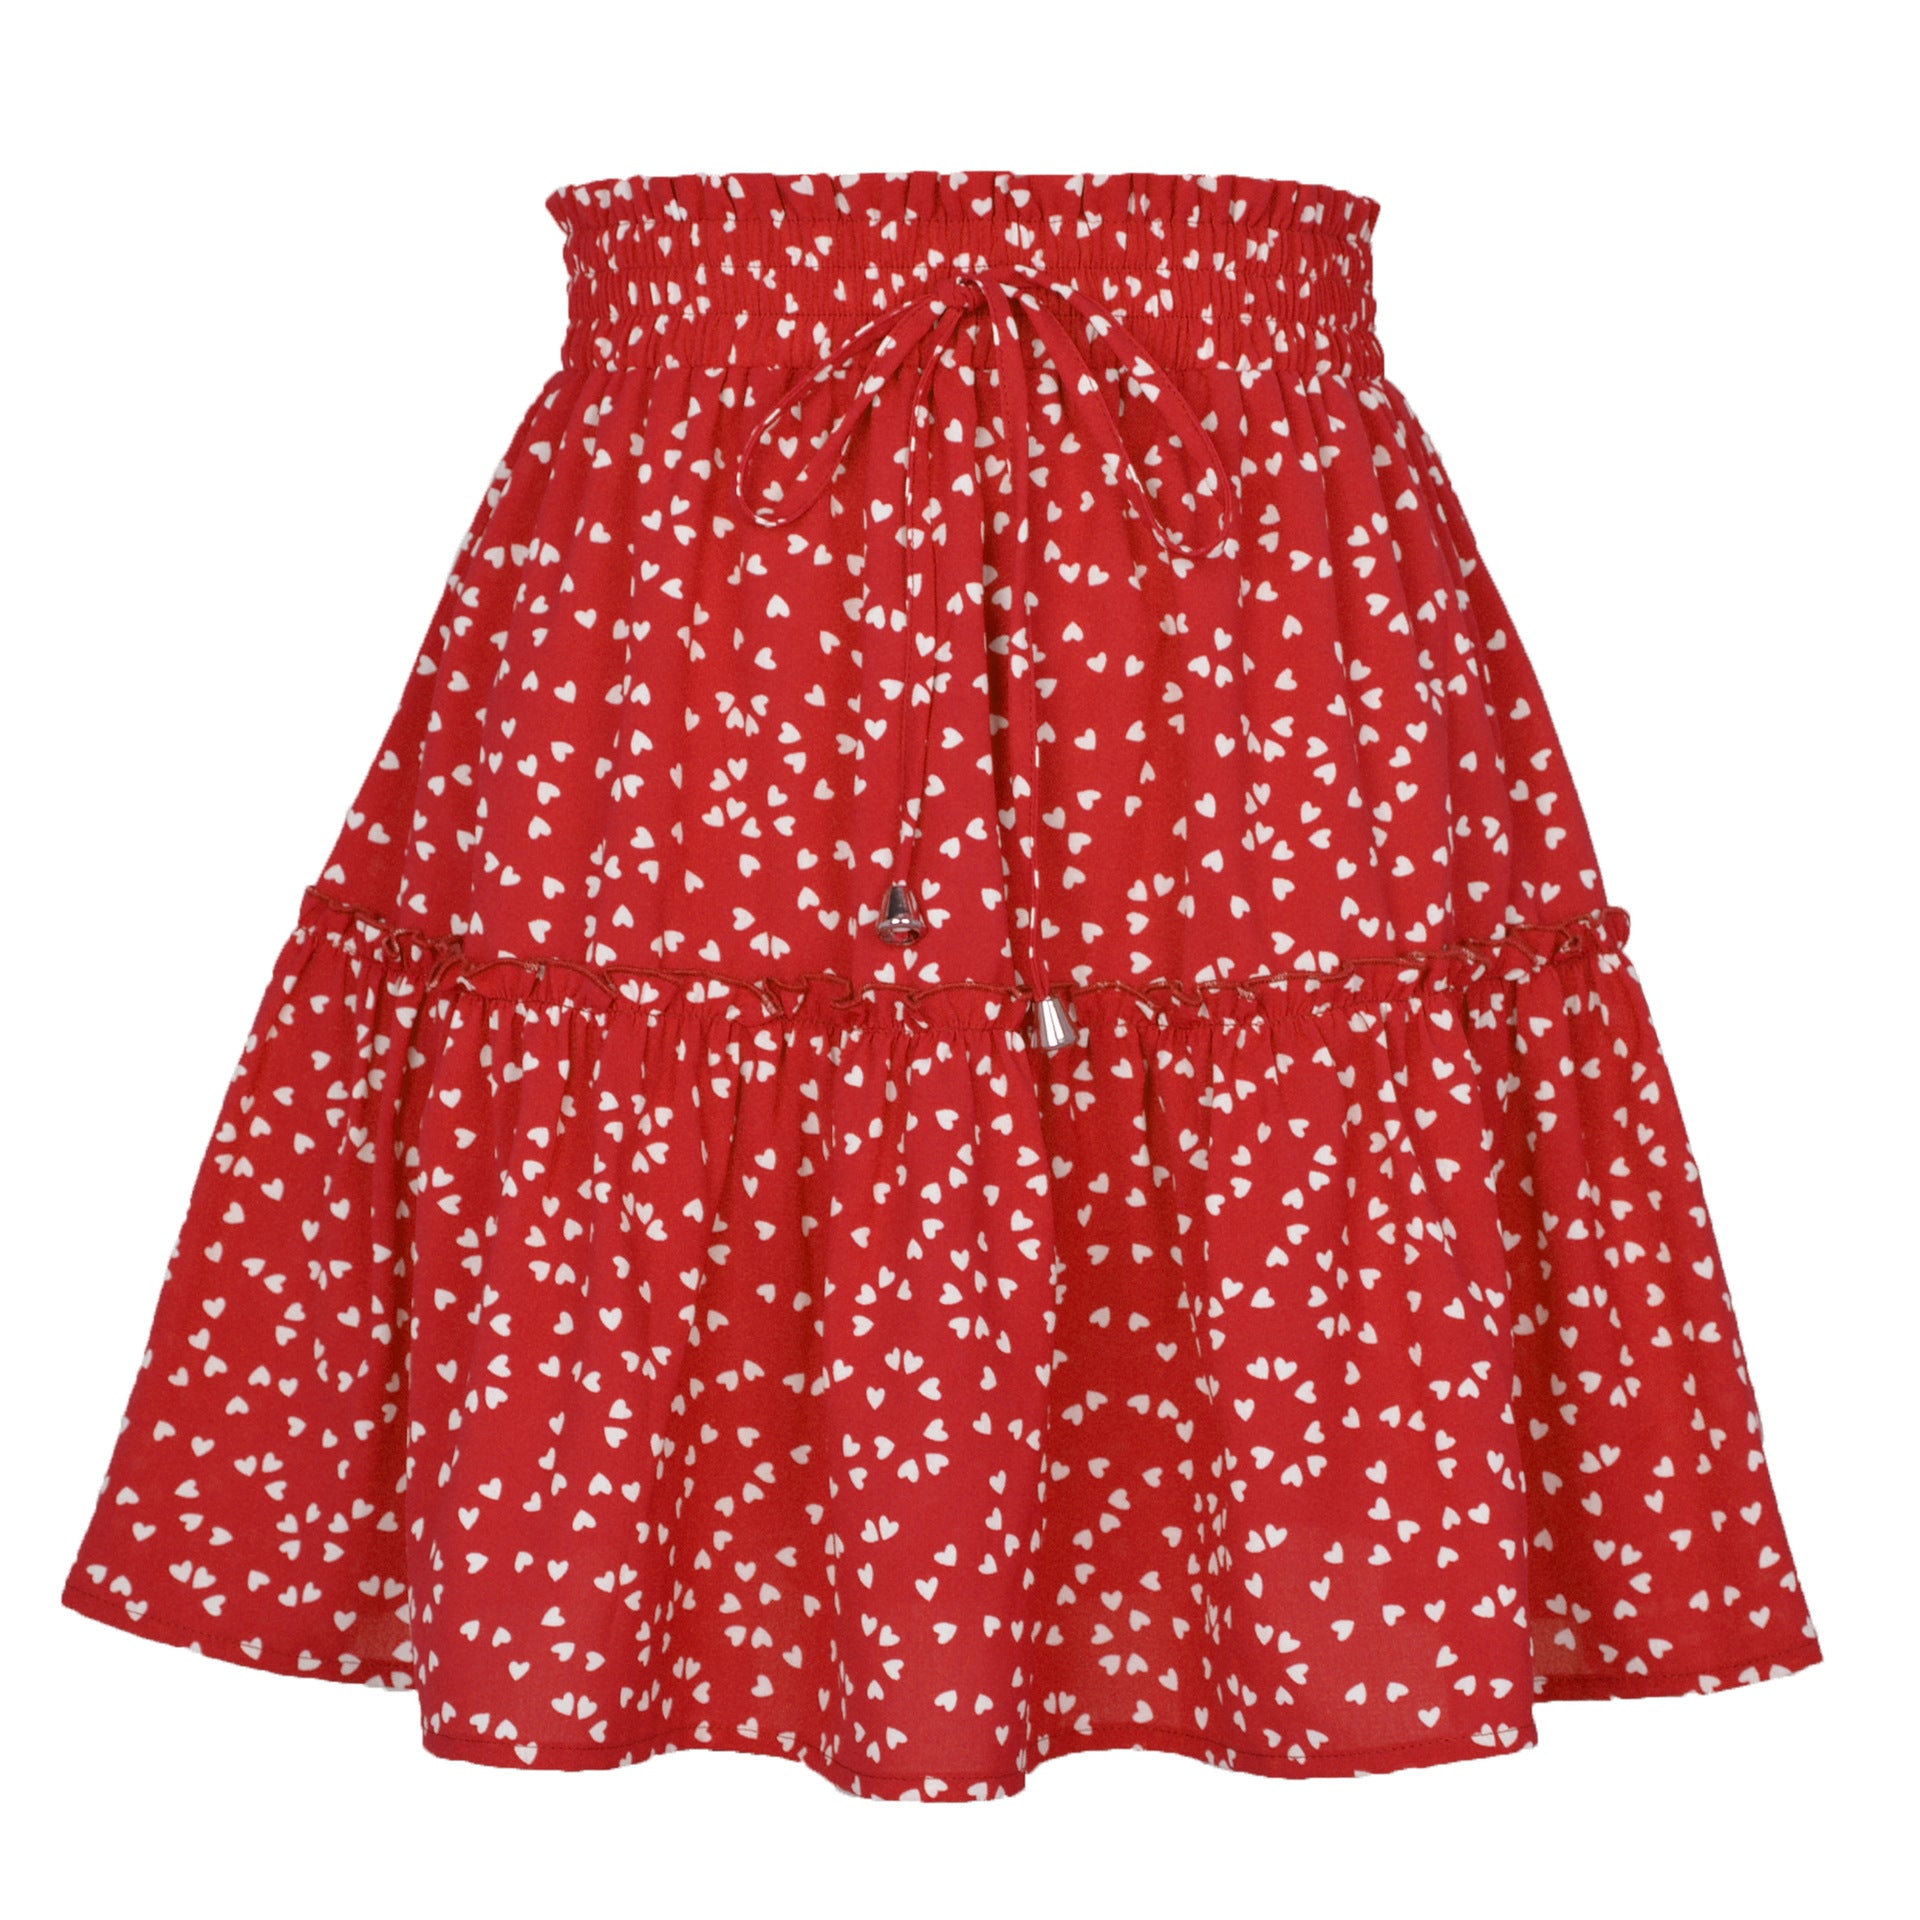 Women's High Waist Fashion Printed Polyester Fiber Small Floral Short Skirt